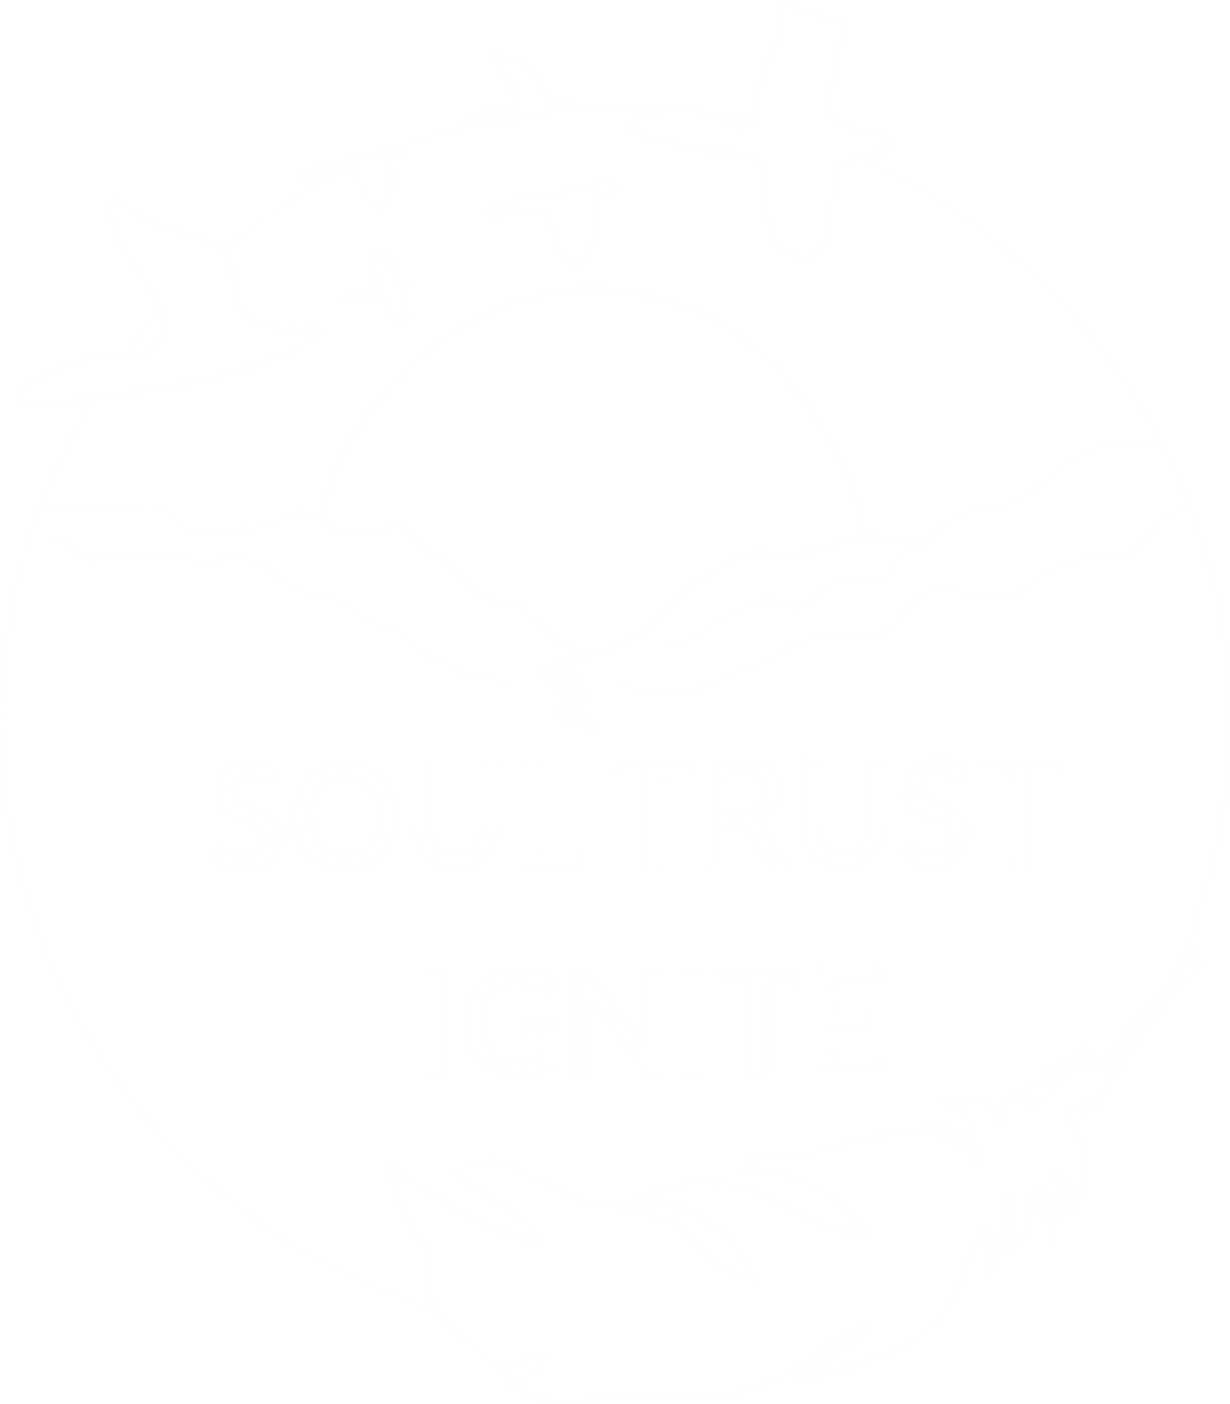 Soul Trust Ignite logo